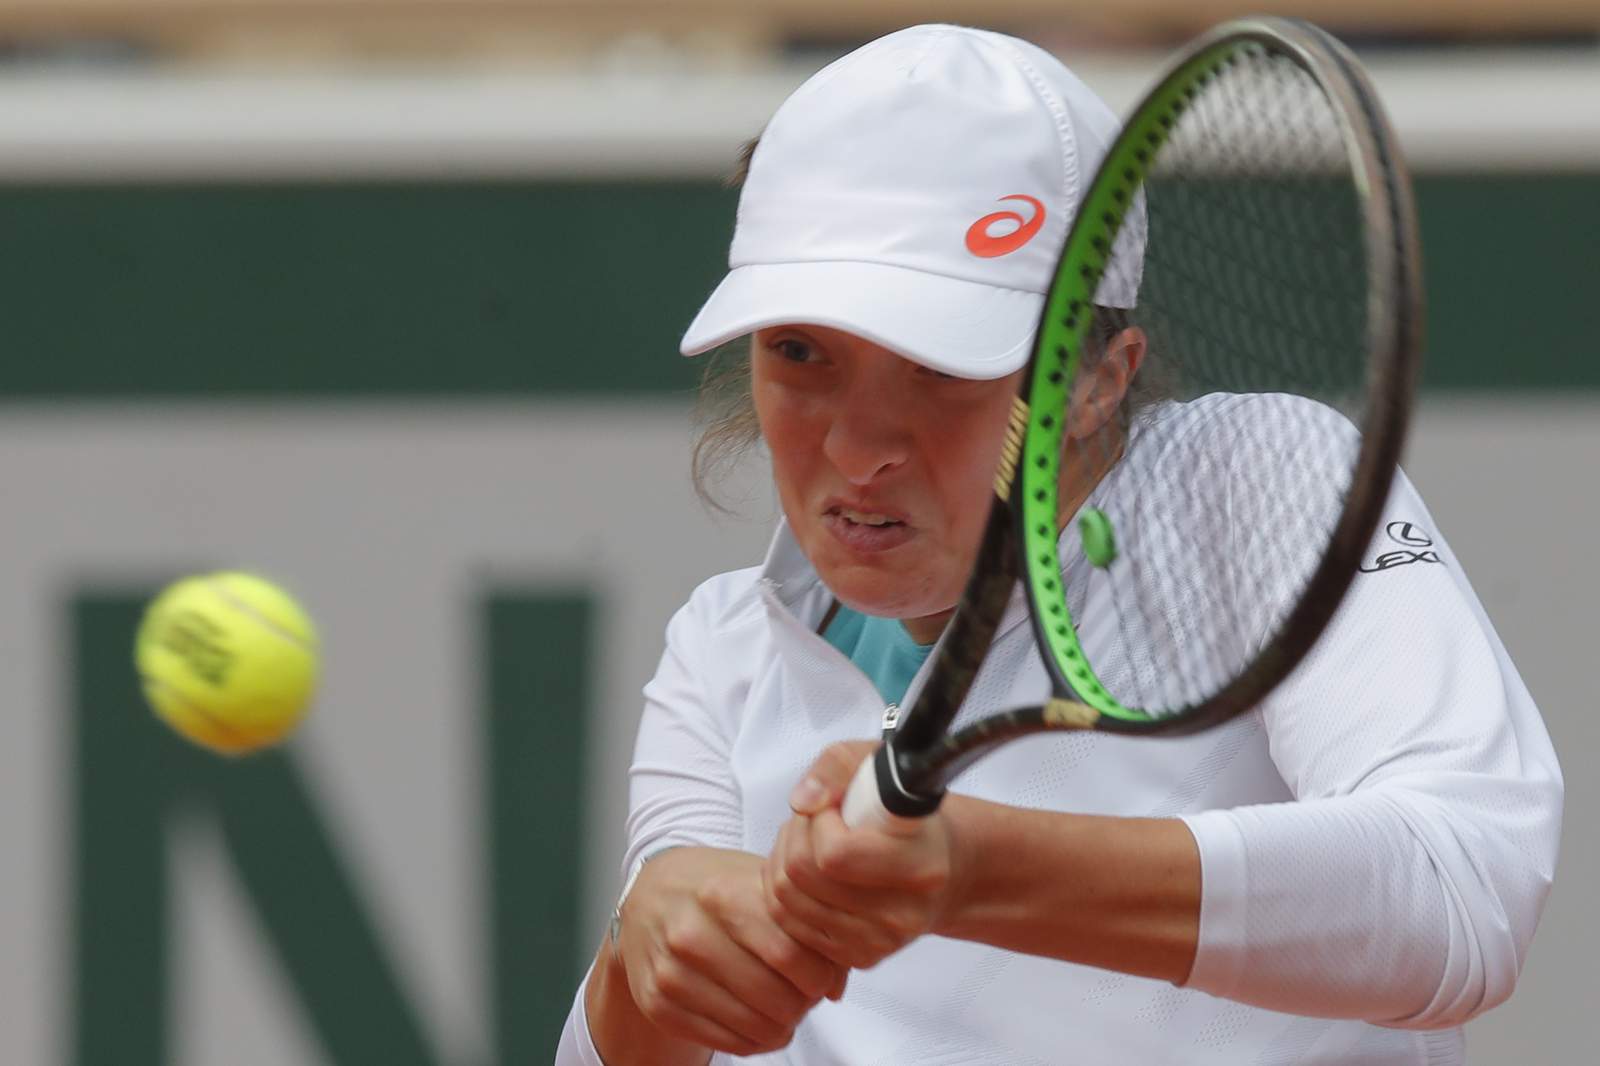 The Latest: Polish teen Swiatek reaches French Open final